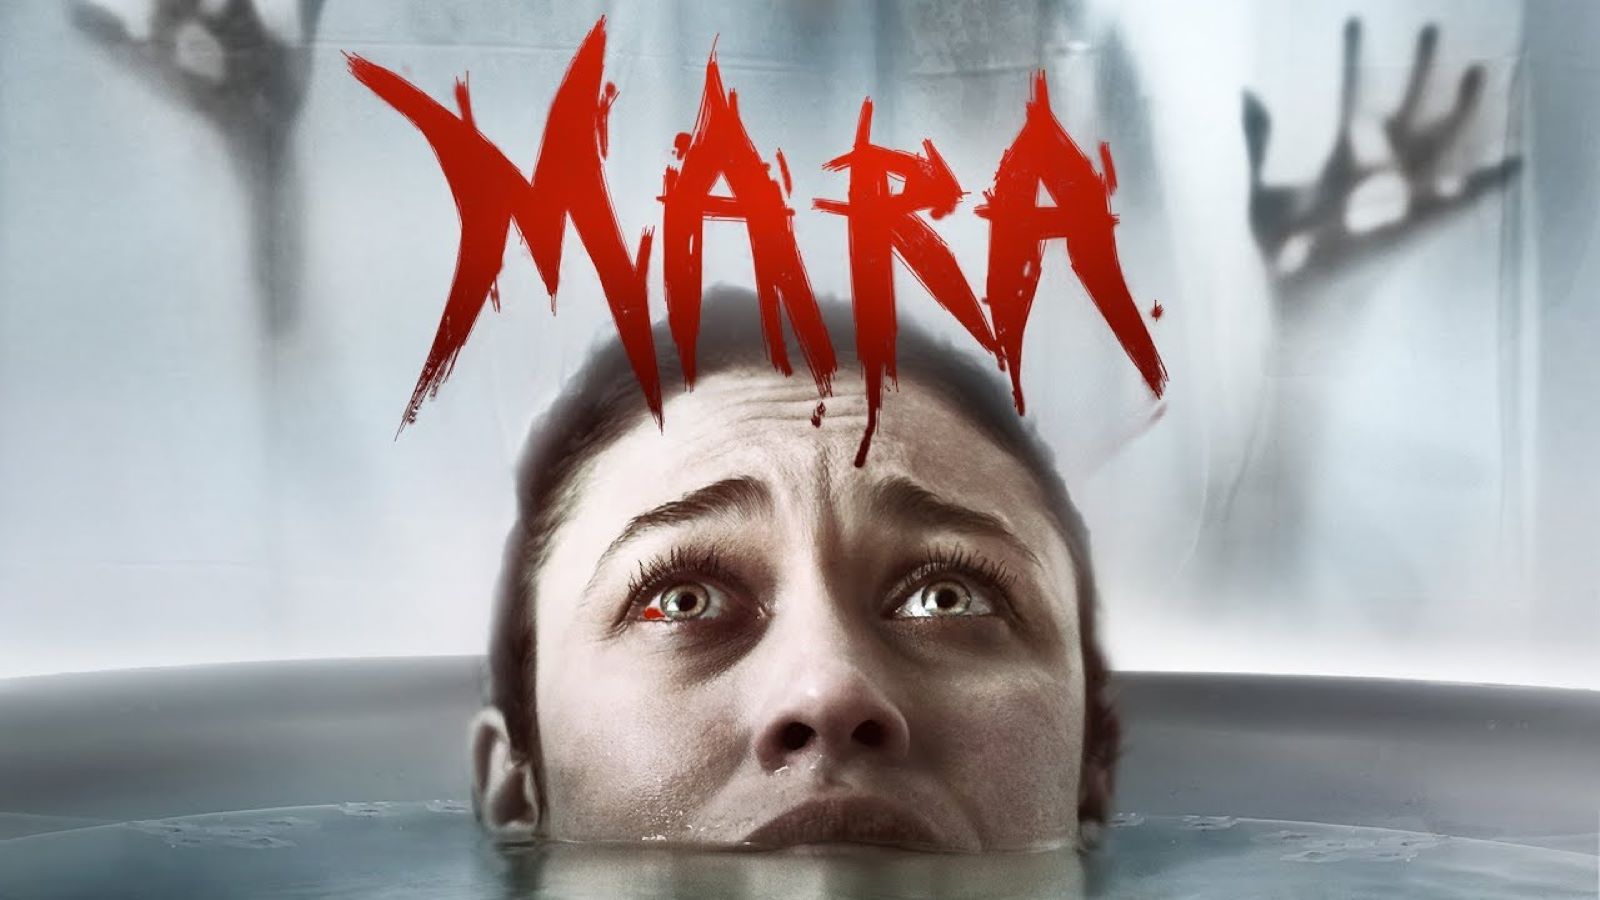 Mara stasera su Rai 4: trama e cast del thriller soprannaturale con Olga Kurylenko